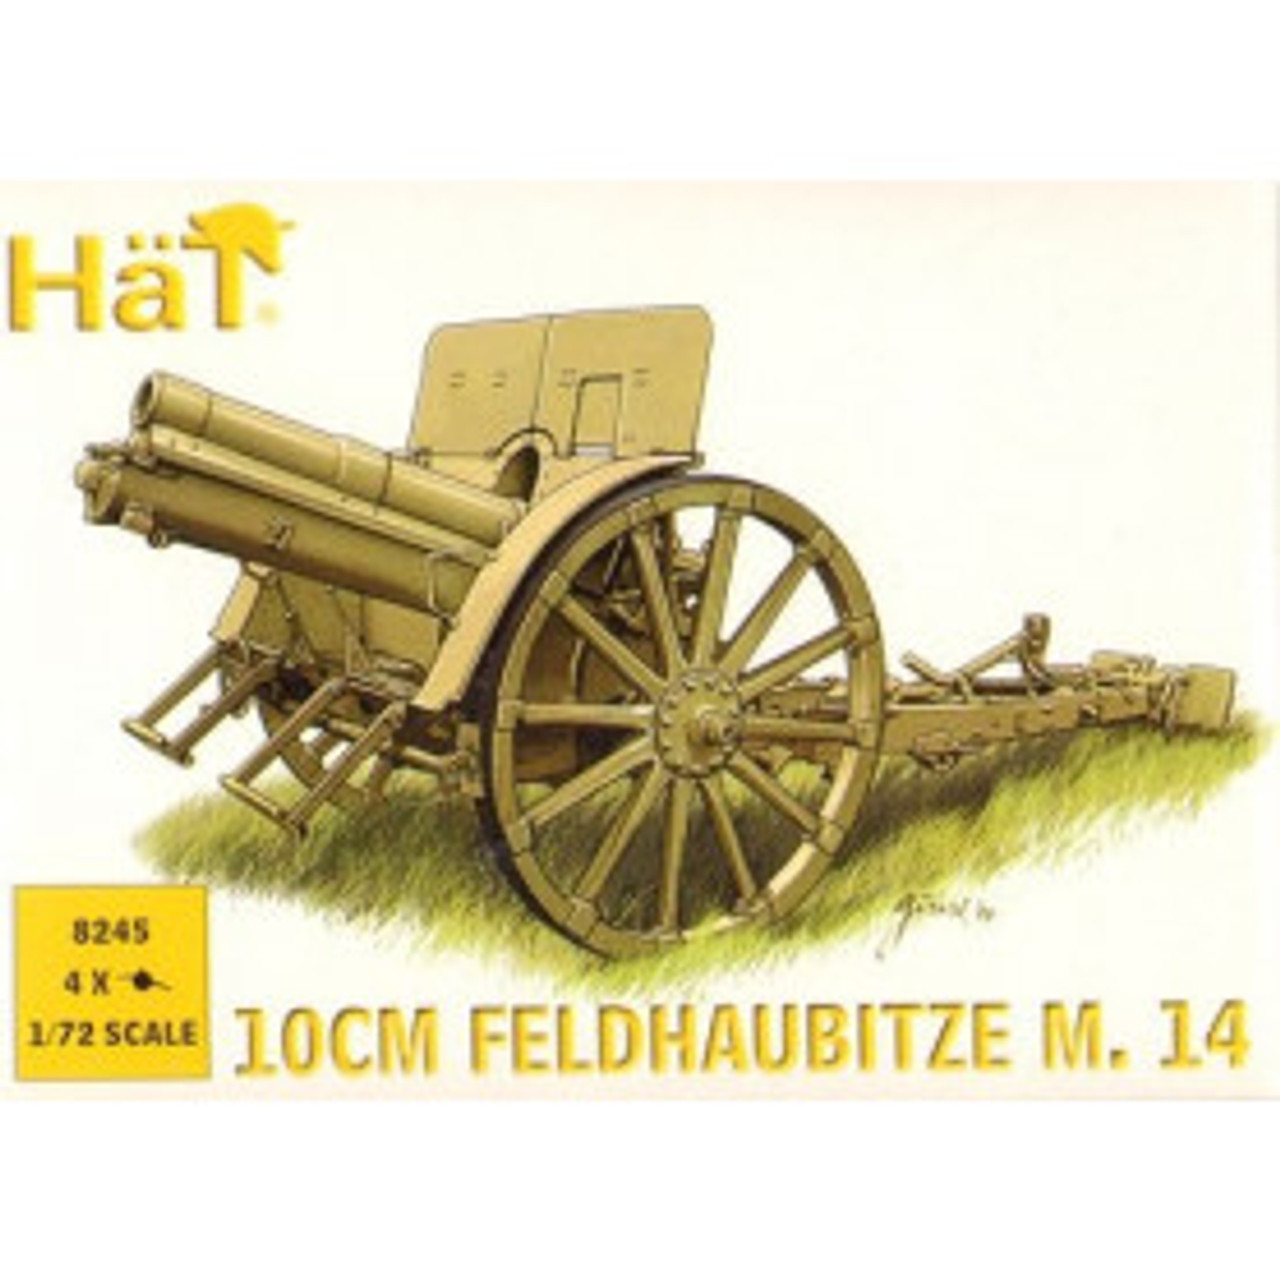 HaT 8245 WWI10cm Feldhaubitze M.14 1:72 Scale